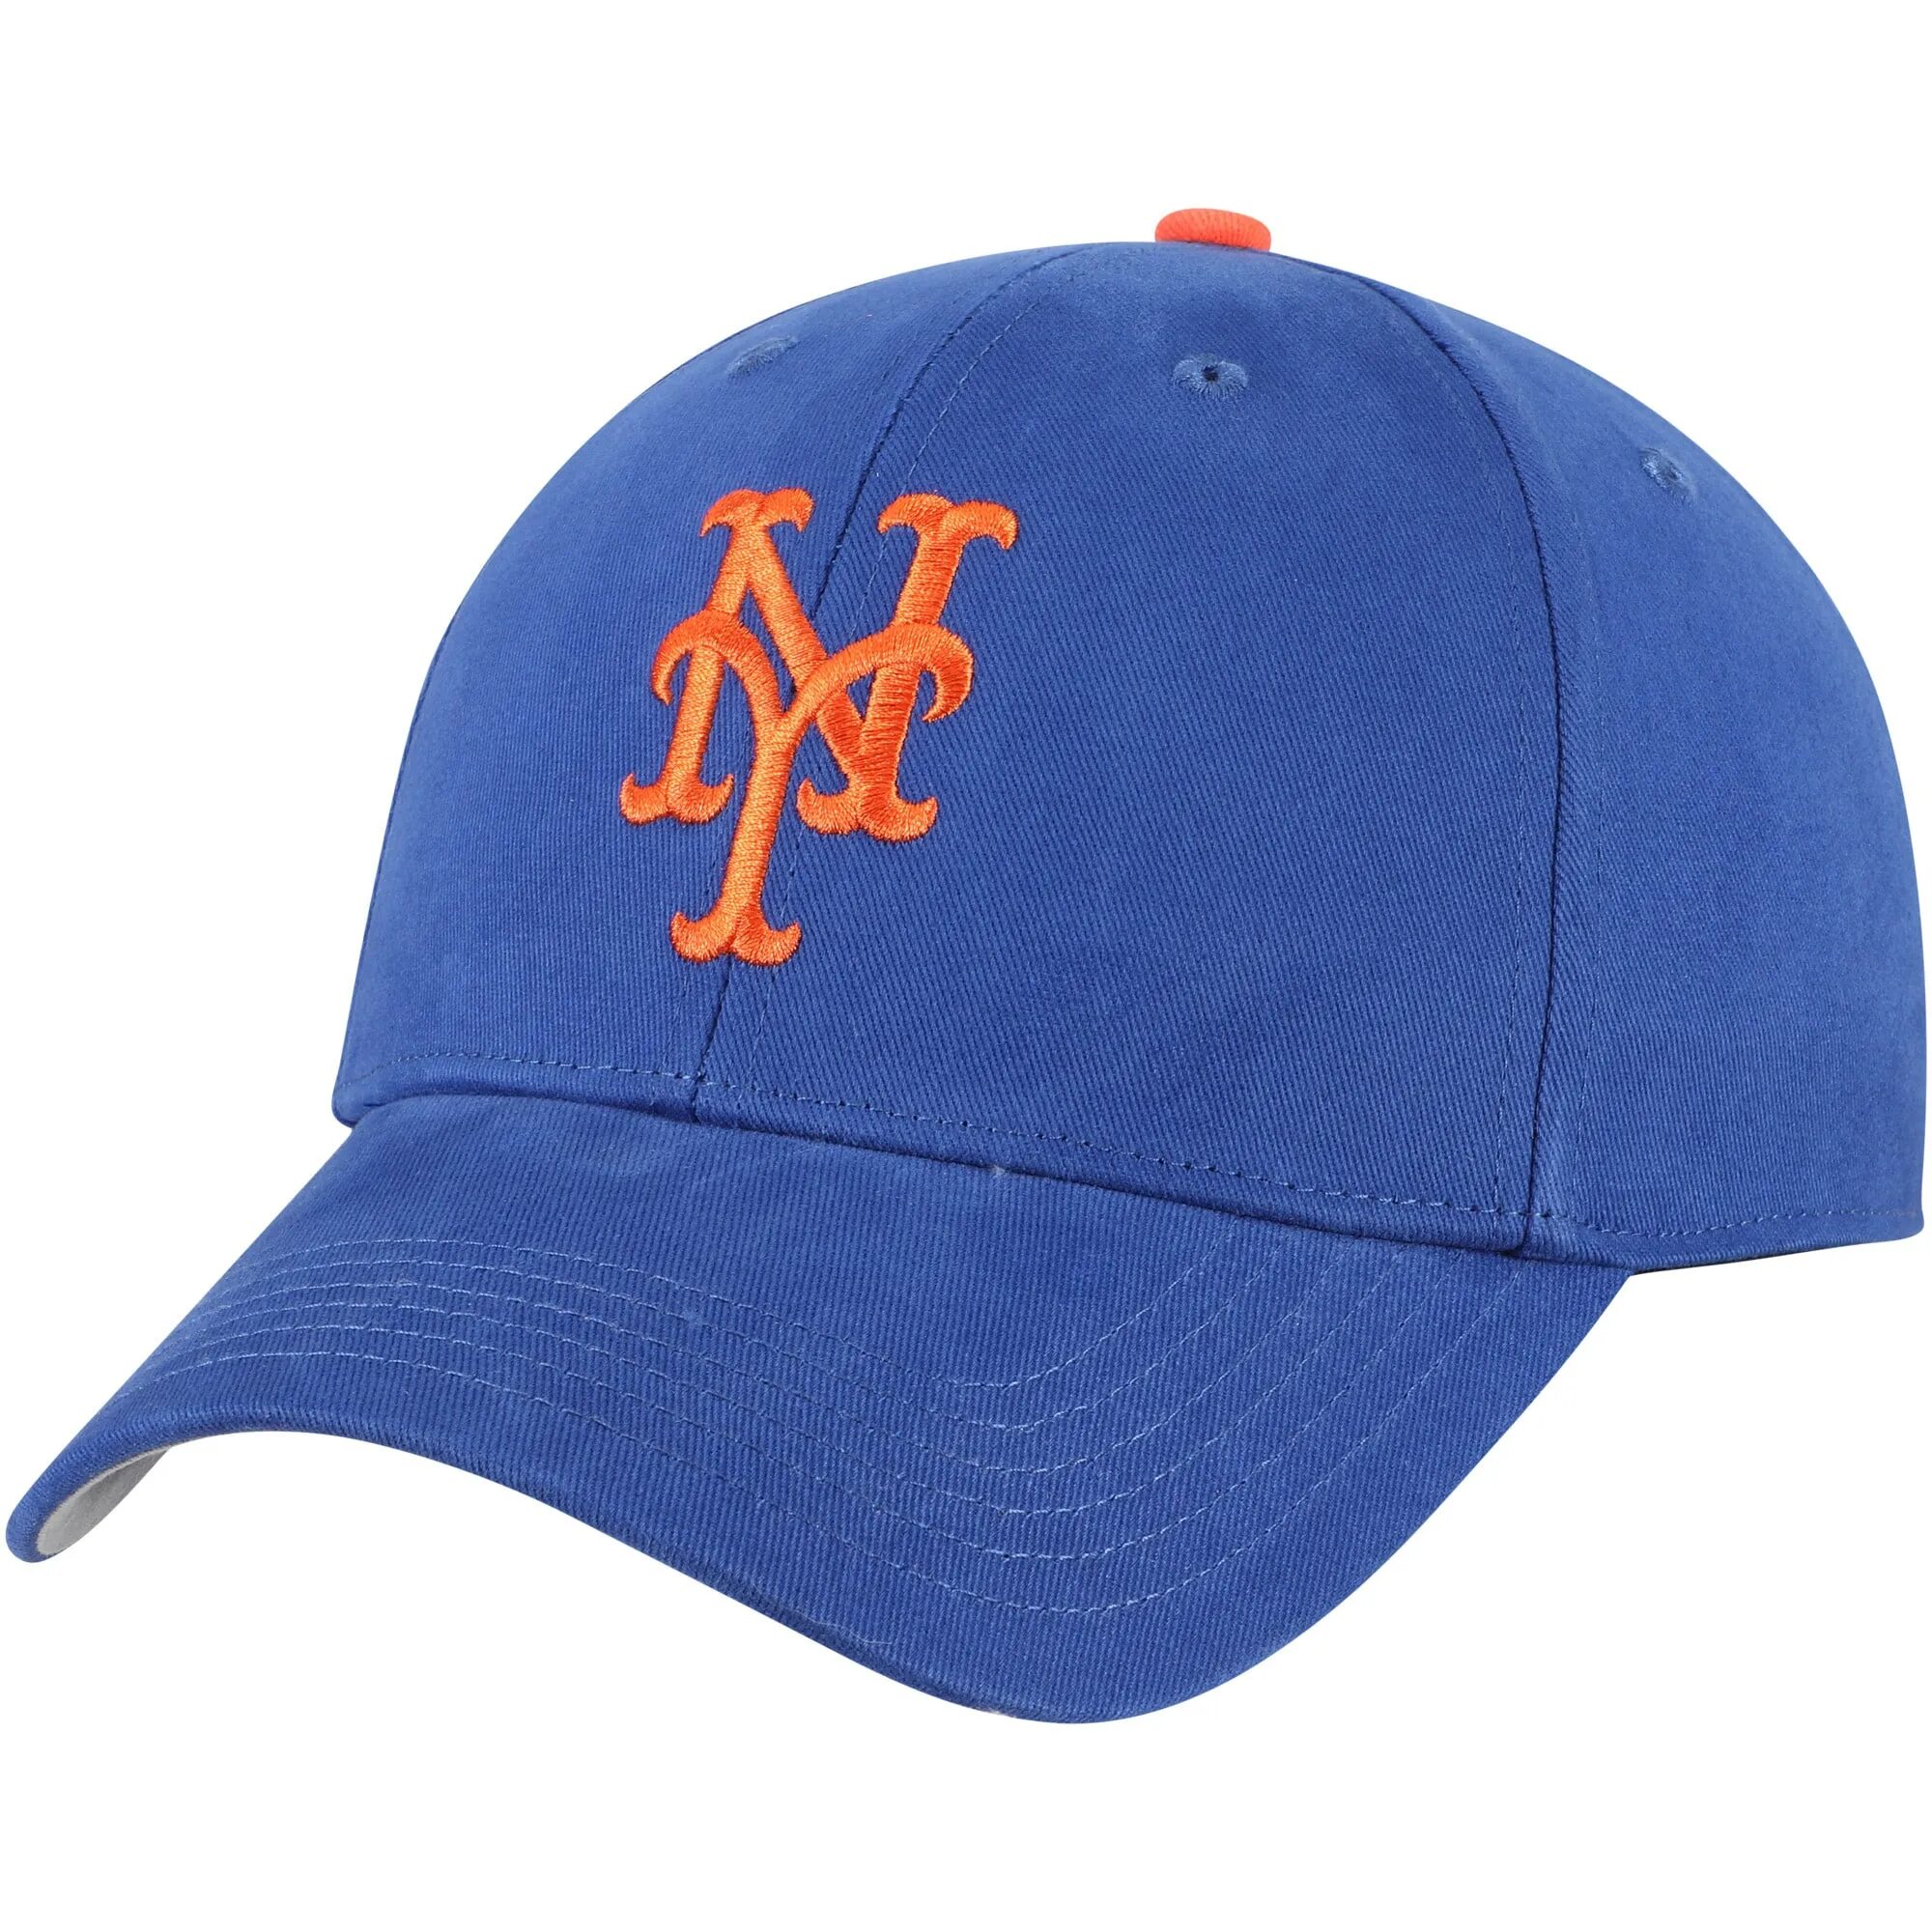 Mets cap. New York Mets gorra Gran venta - off 66.